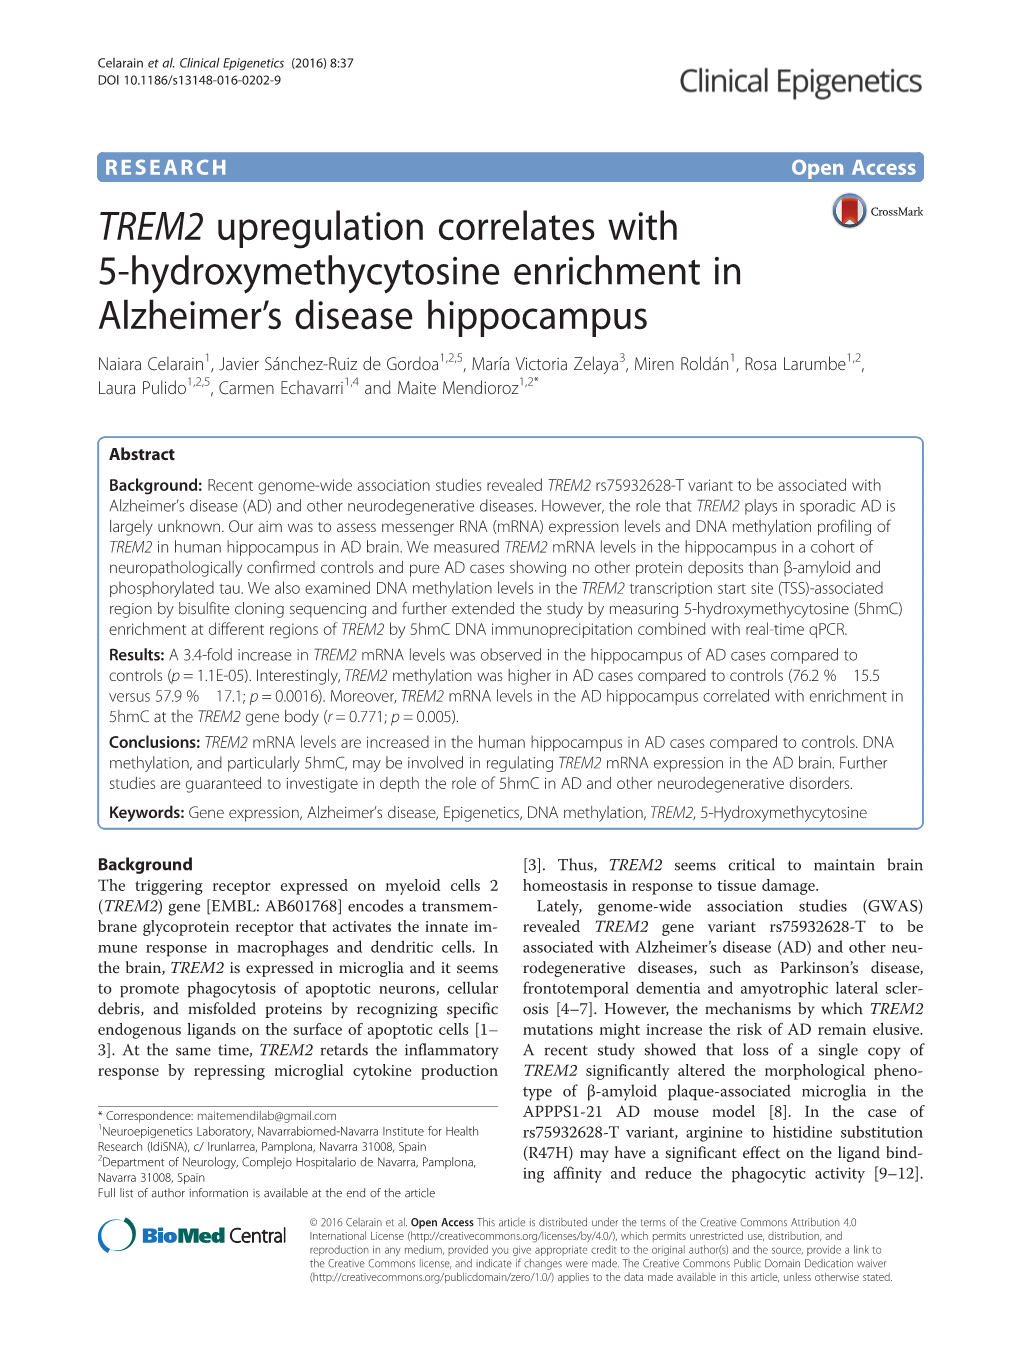 TREM2 Upregulation Correlates with 5-Hydroxymethycytosine Enrichment in Alzheimer's Disease Hippocampus